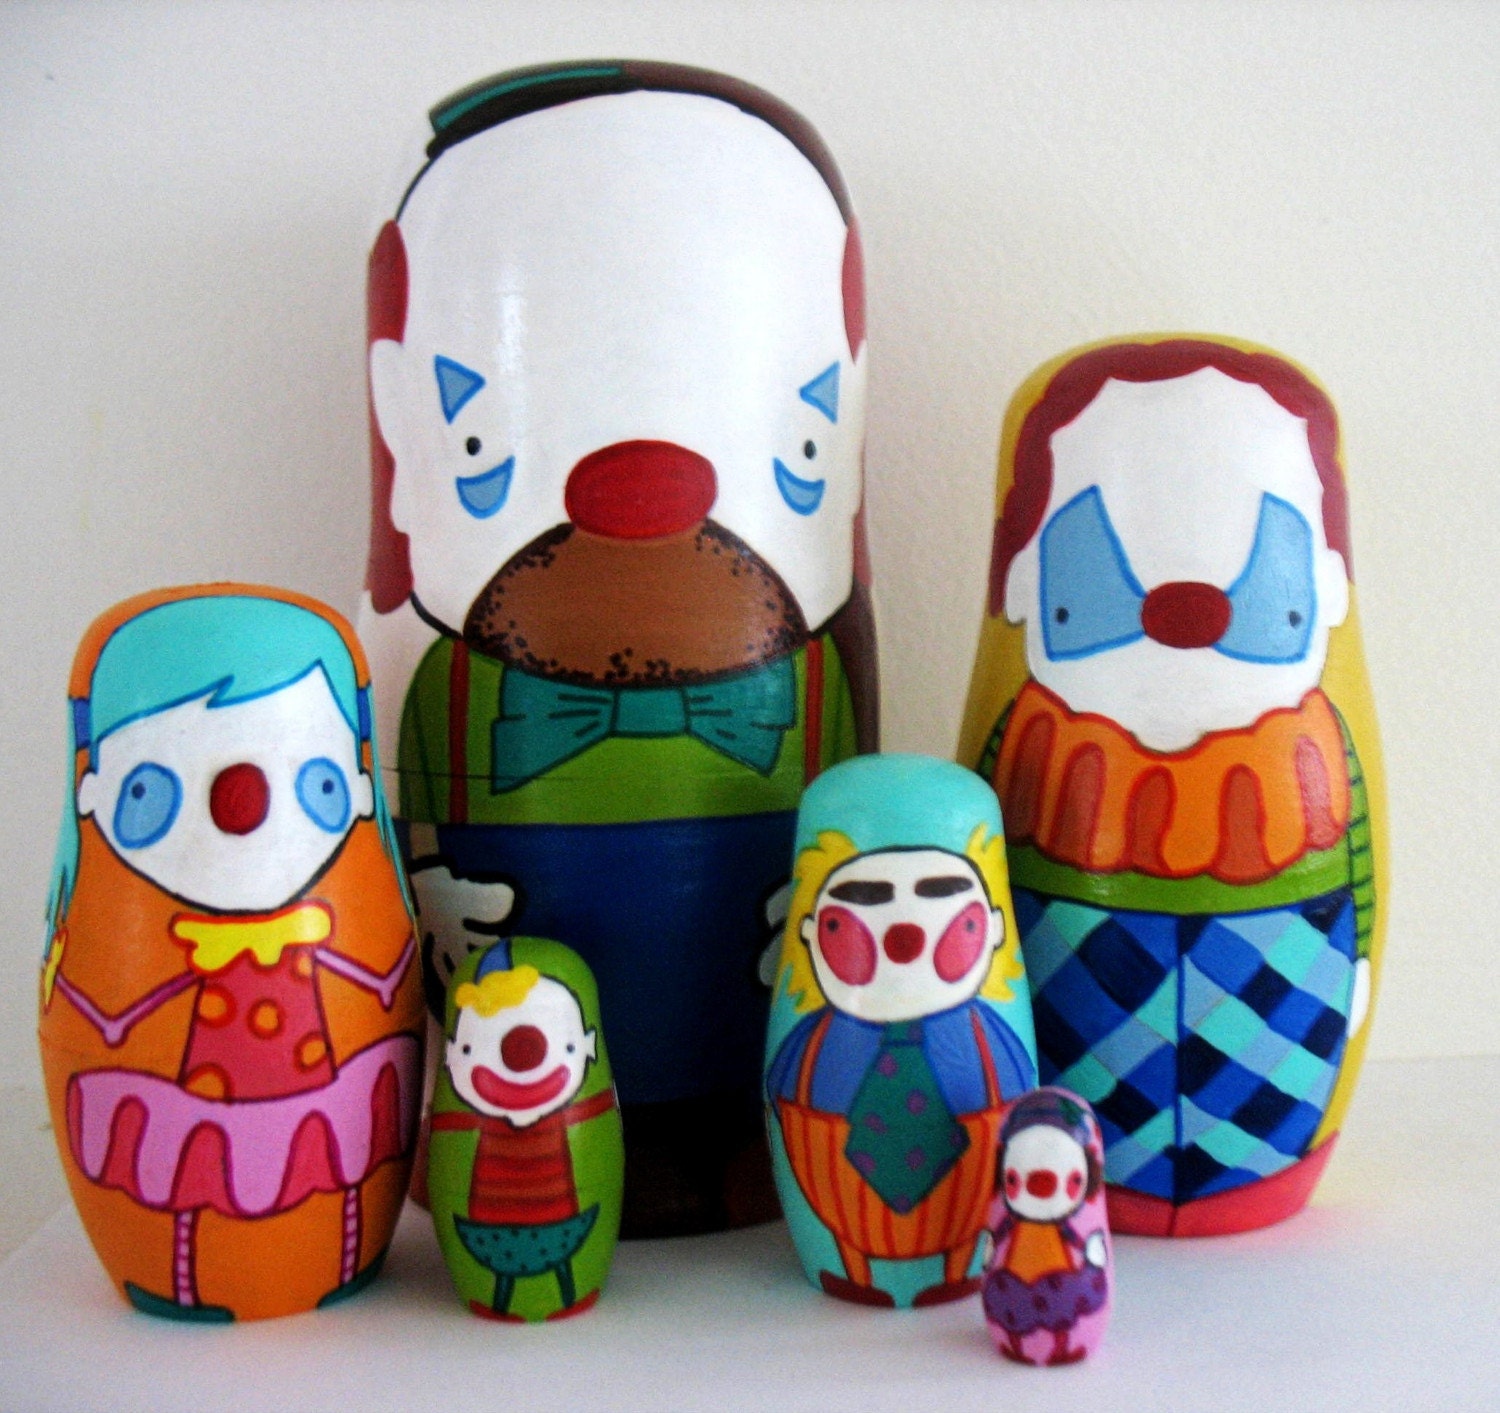 Wooden nesting dolls ... circus clowns